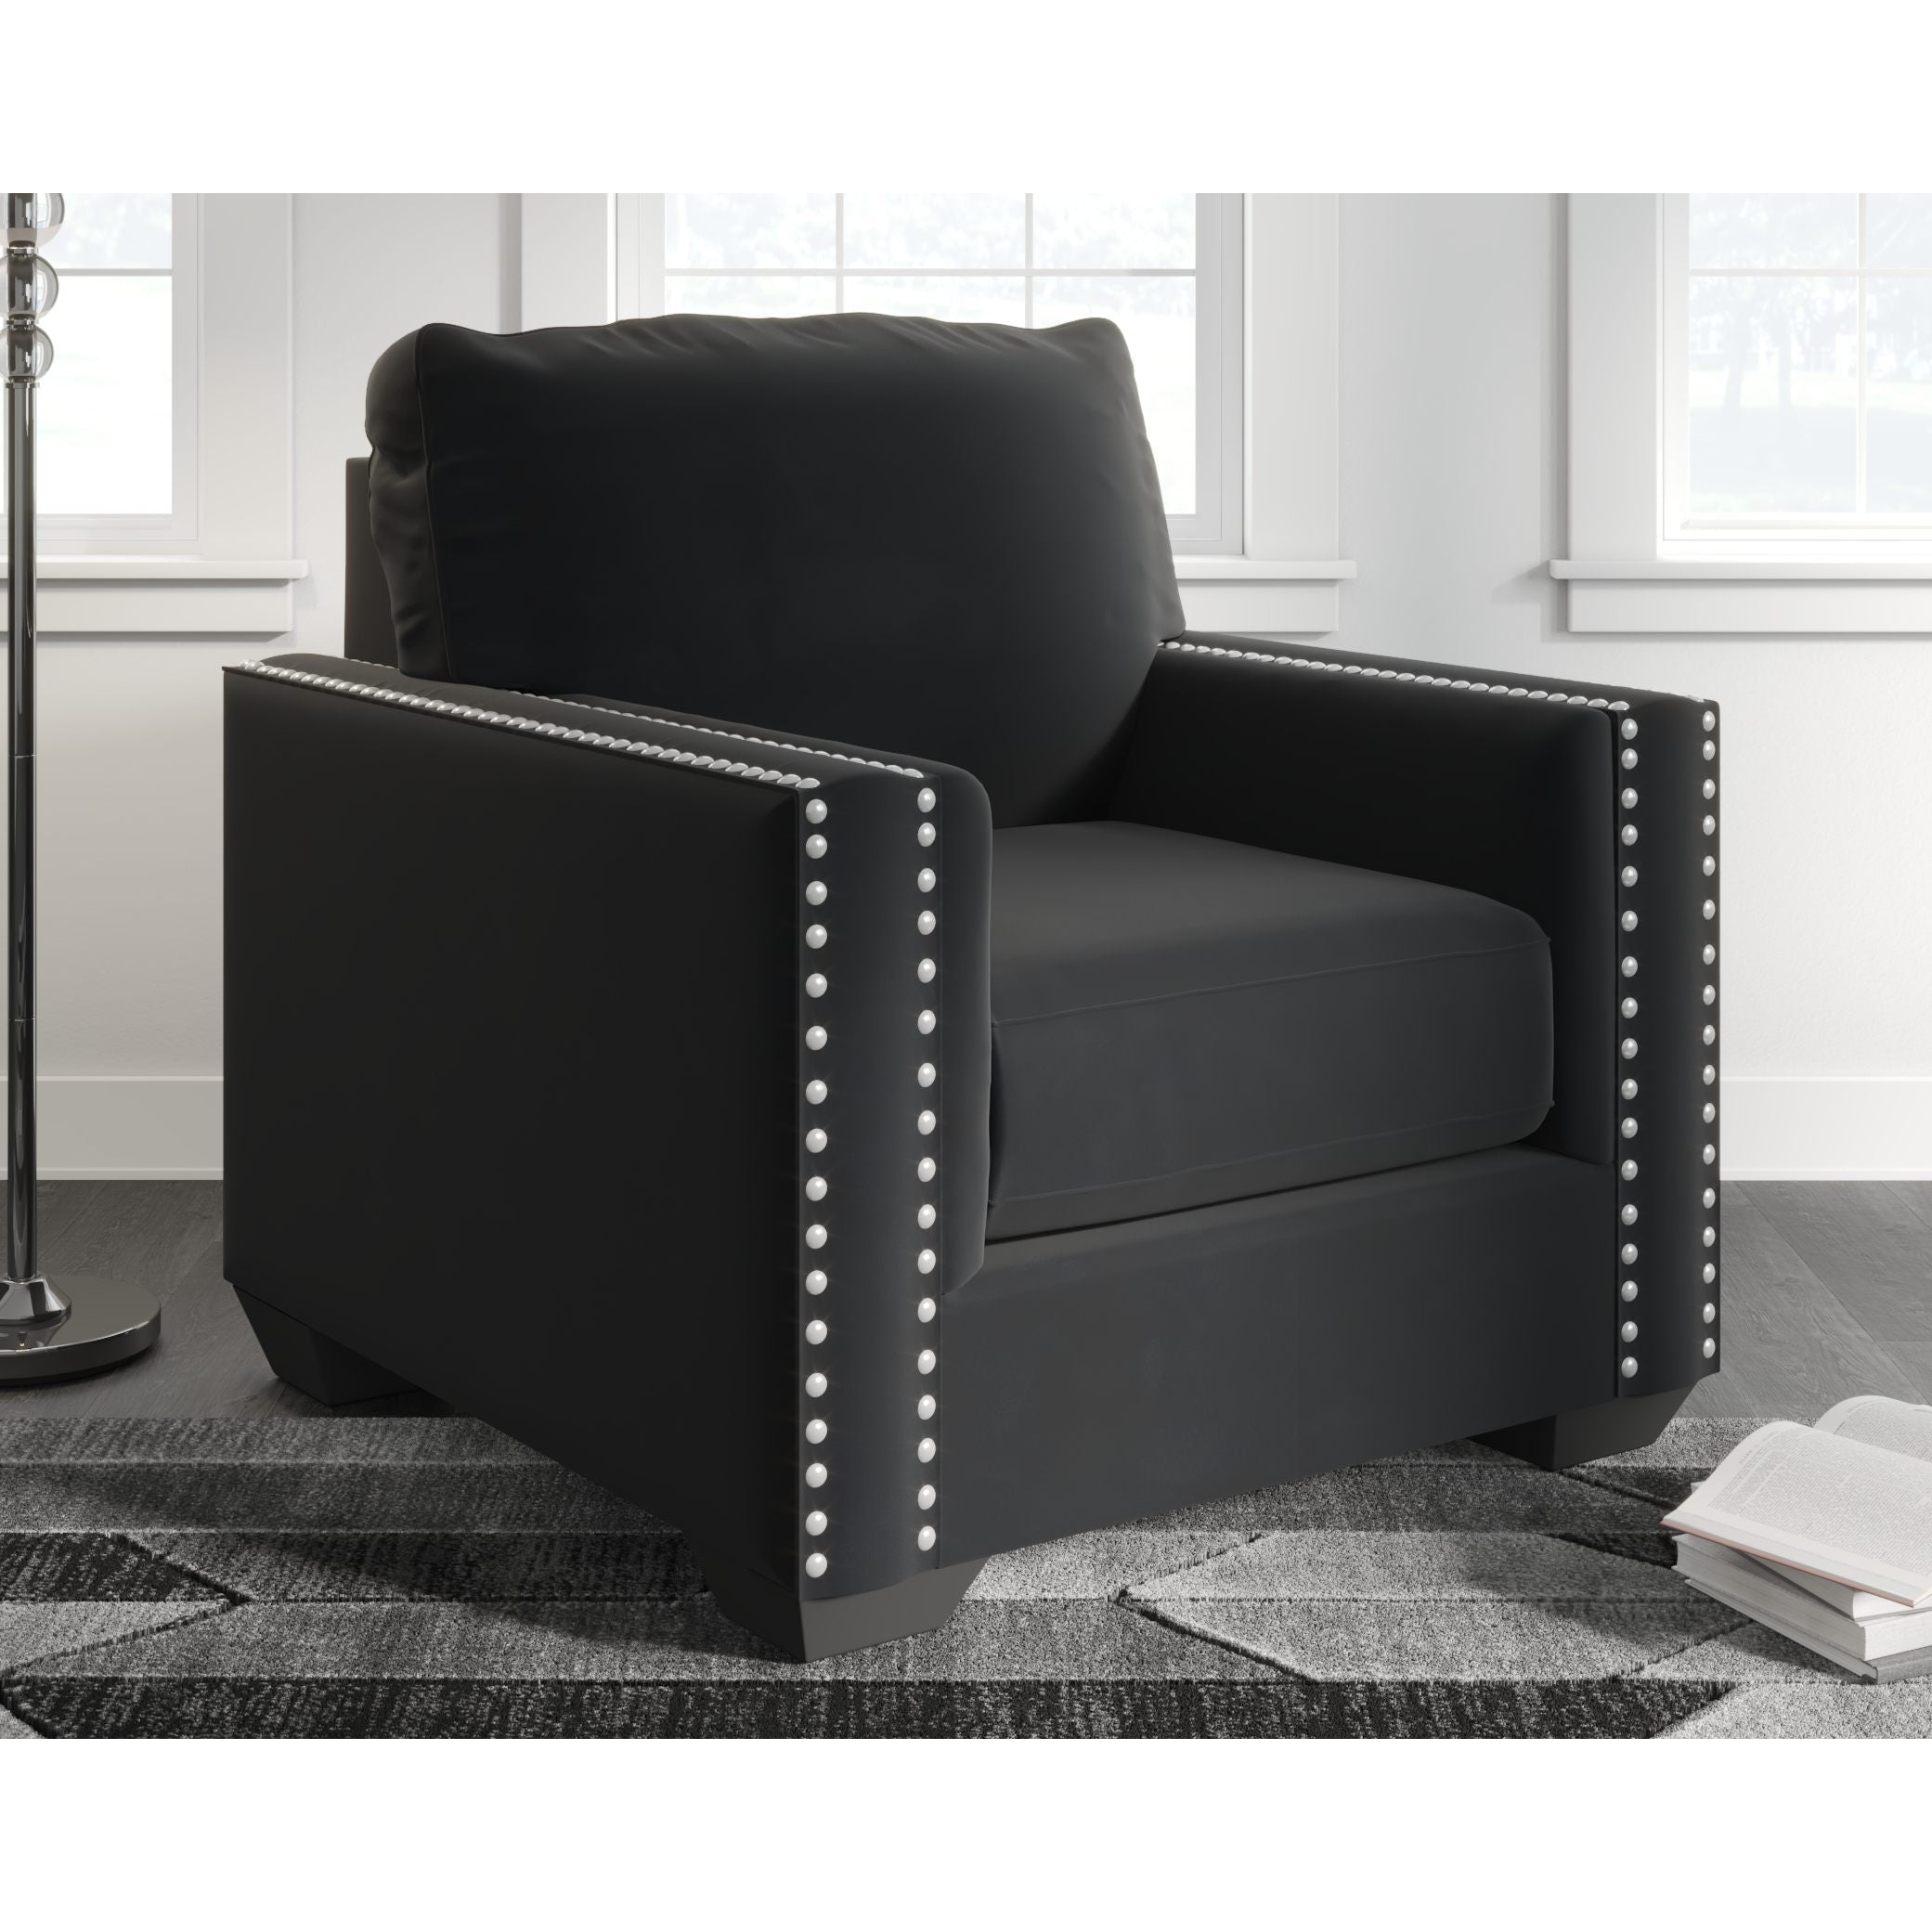 Gleston - Onyx - 2 Pc. - Chair, Ottoman